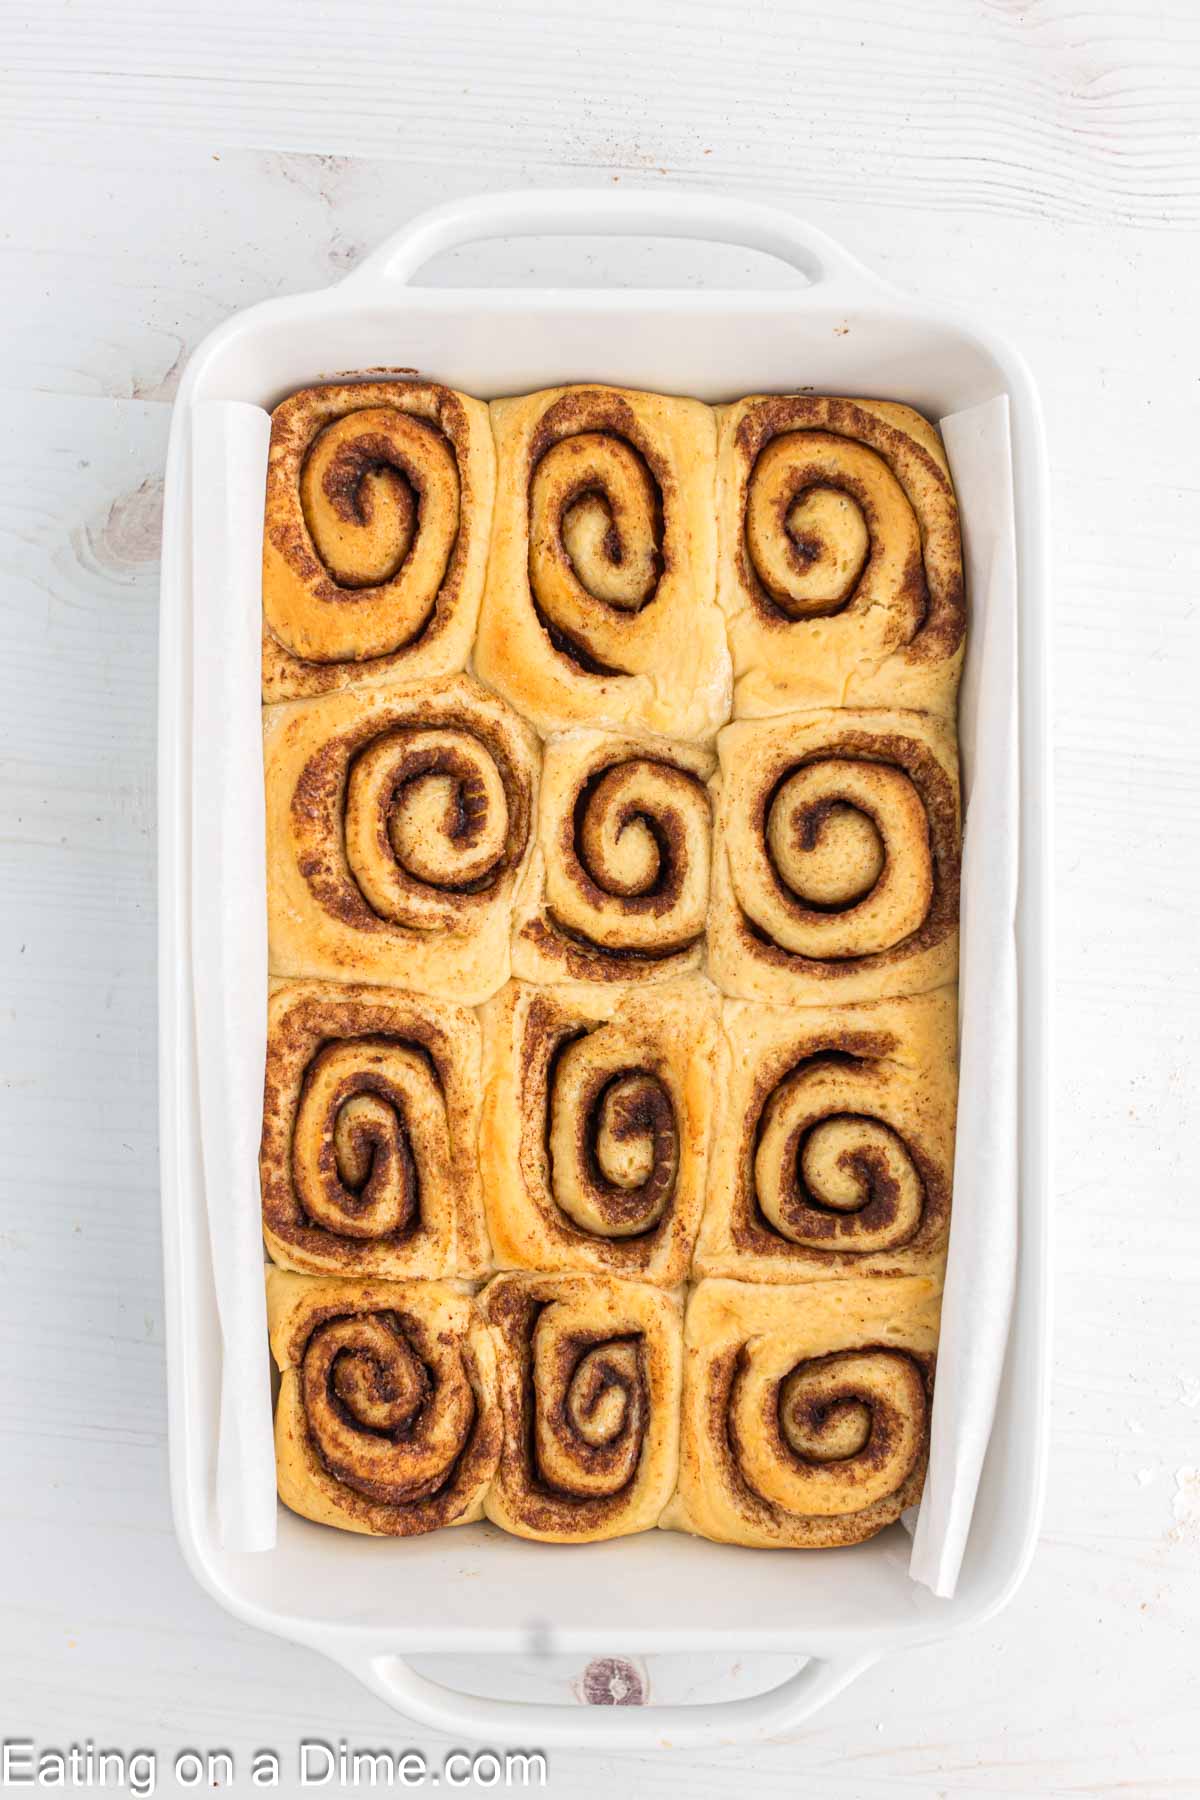 Baked cinnamon rolls in a baking dish